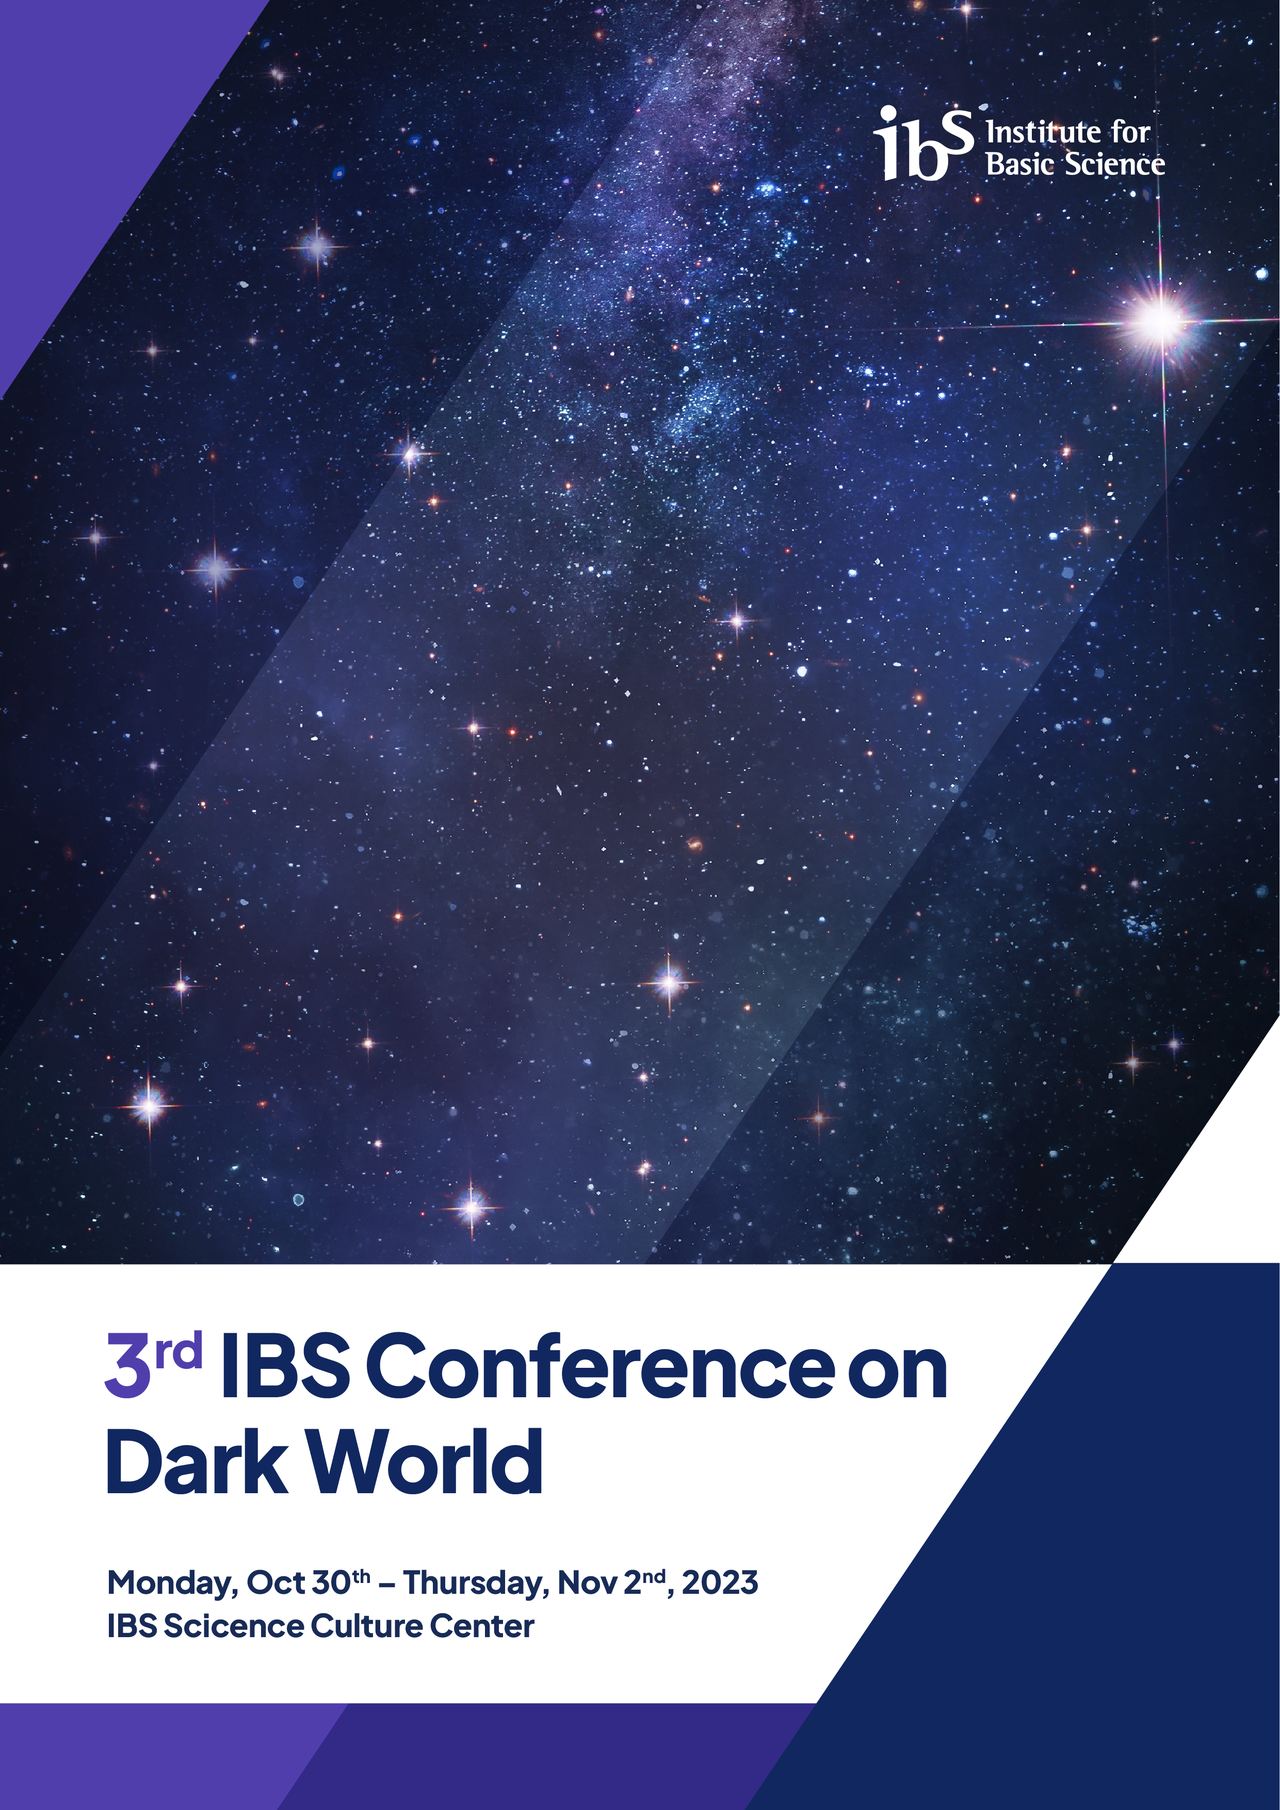 IBS Conference on Dark World